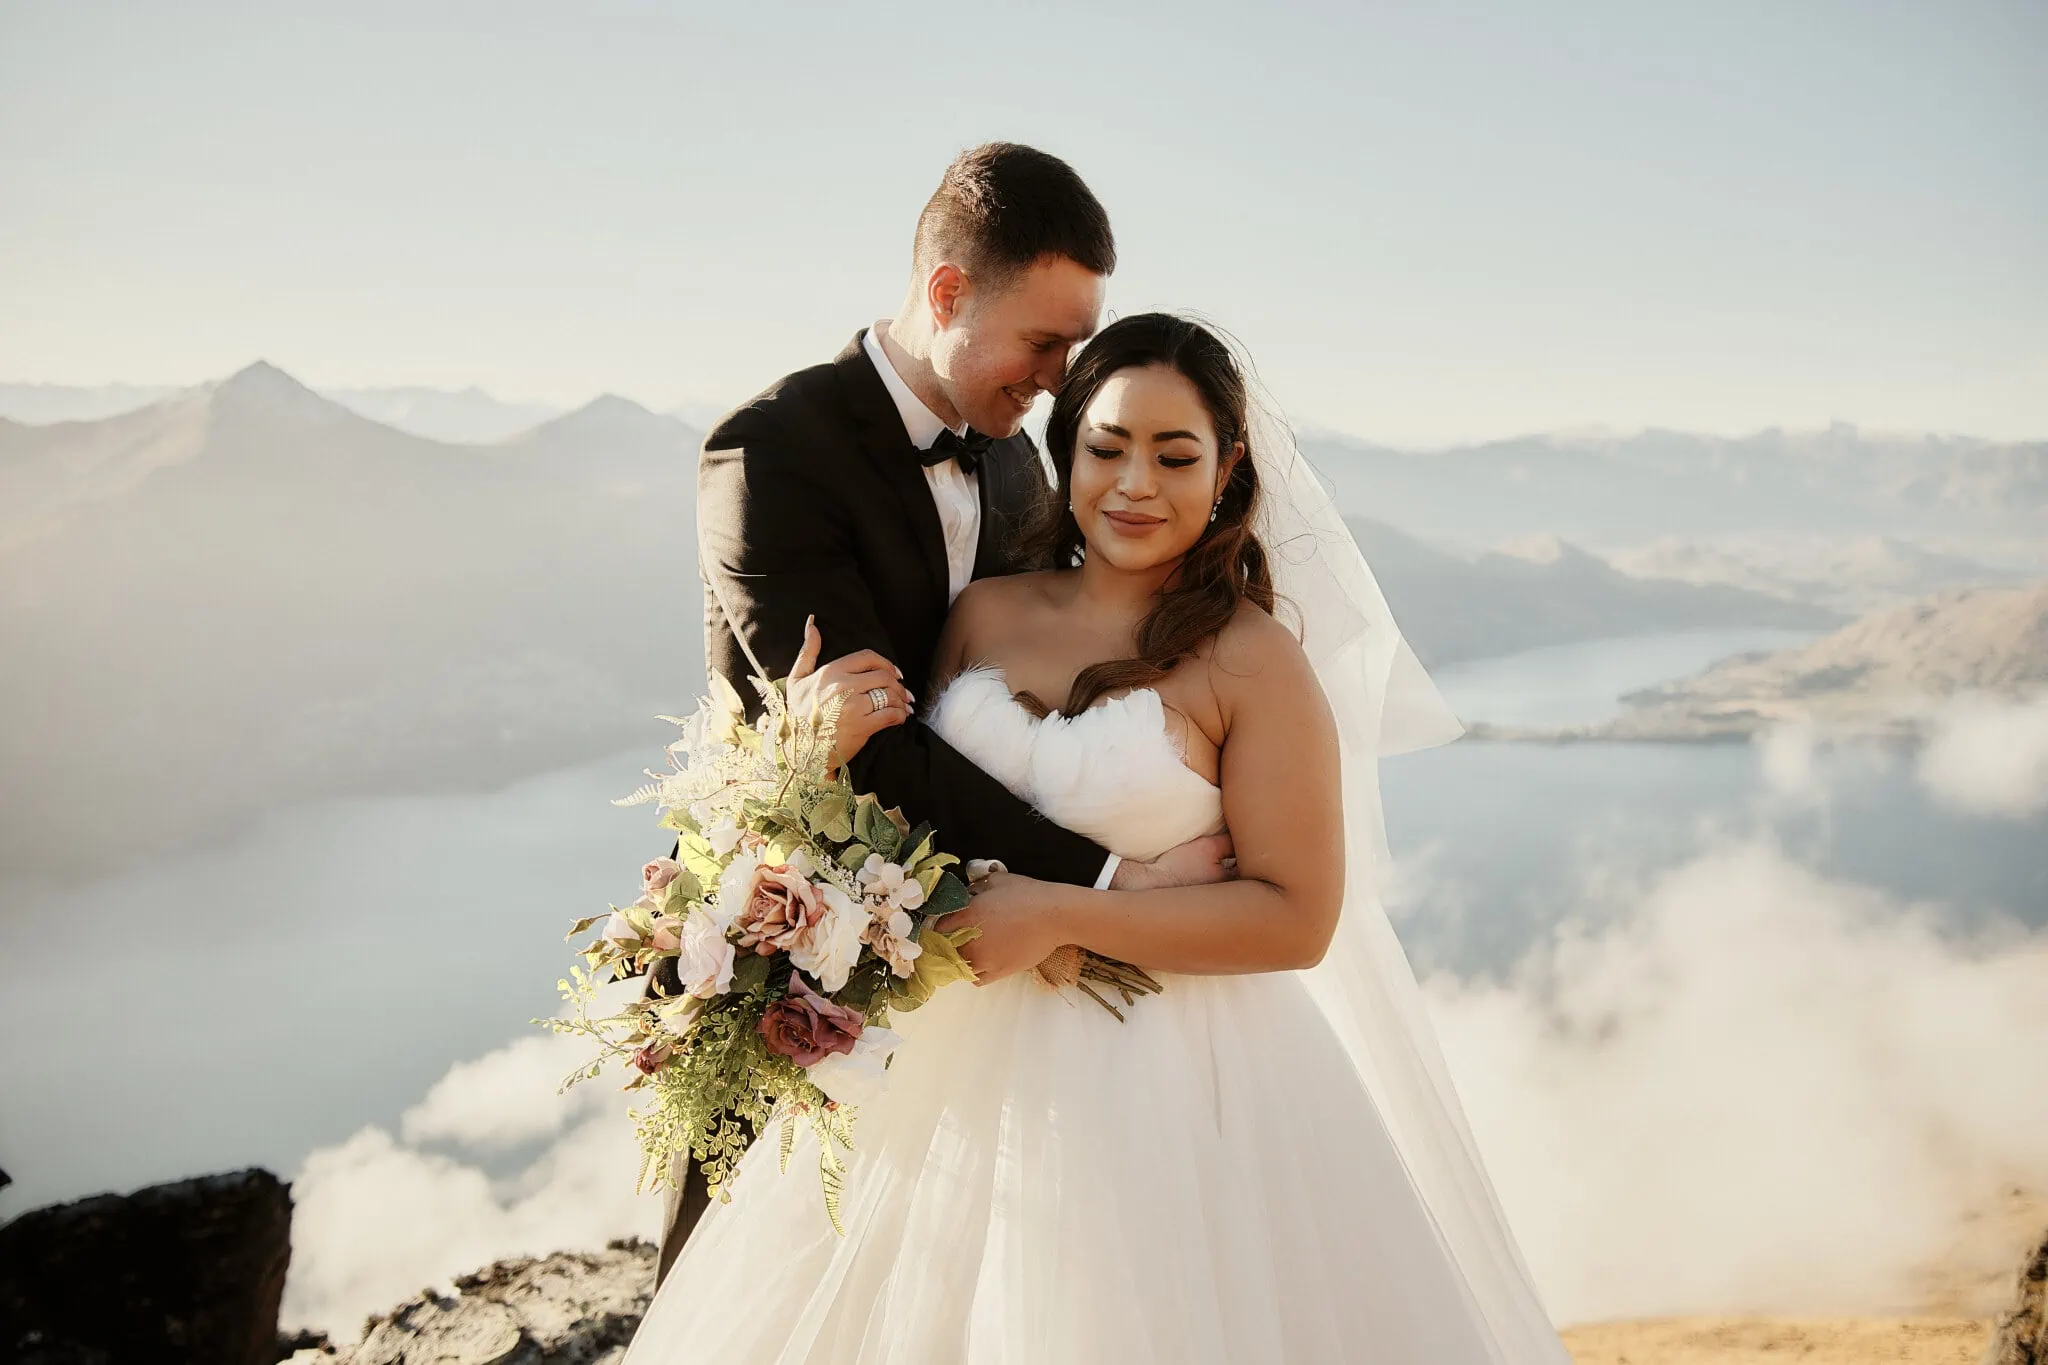 Queenstown New Zealand Elopement Wedding Photographer - Amy and Callum's queenstown wedding shoot on top of a mountain.